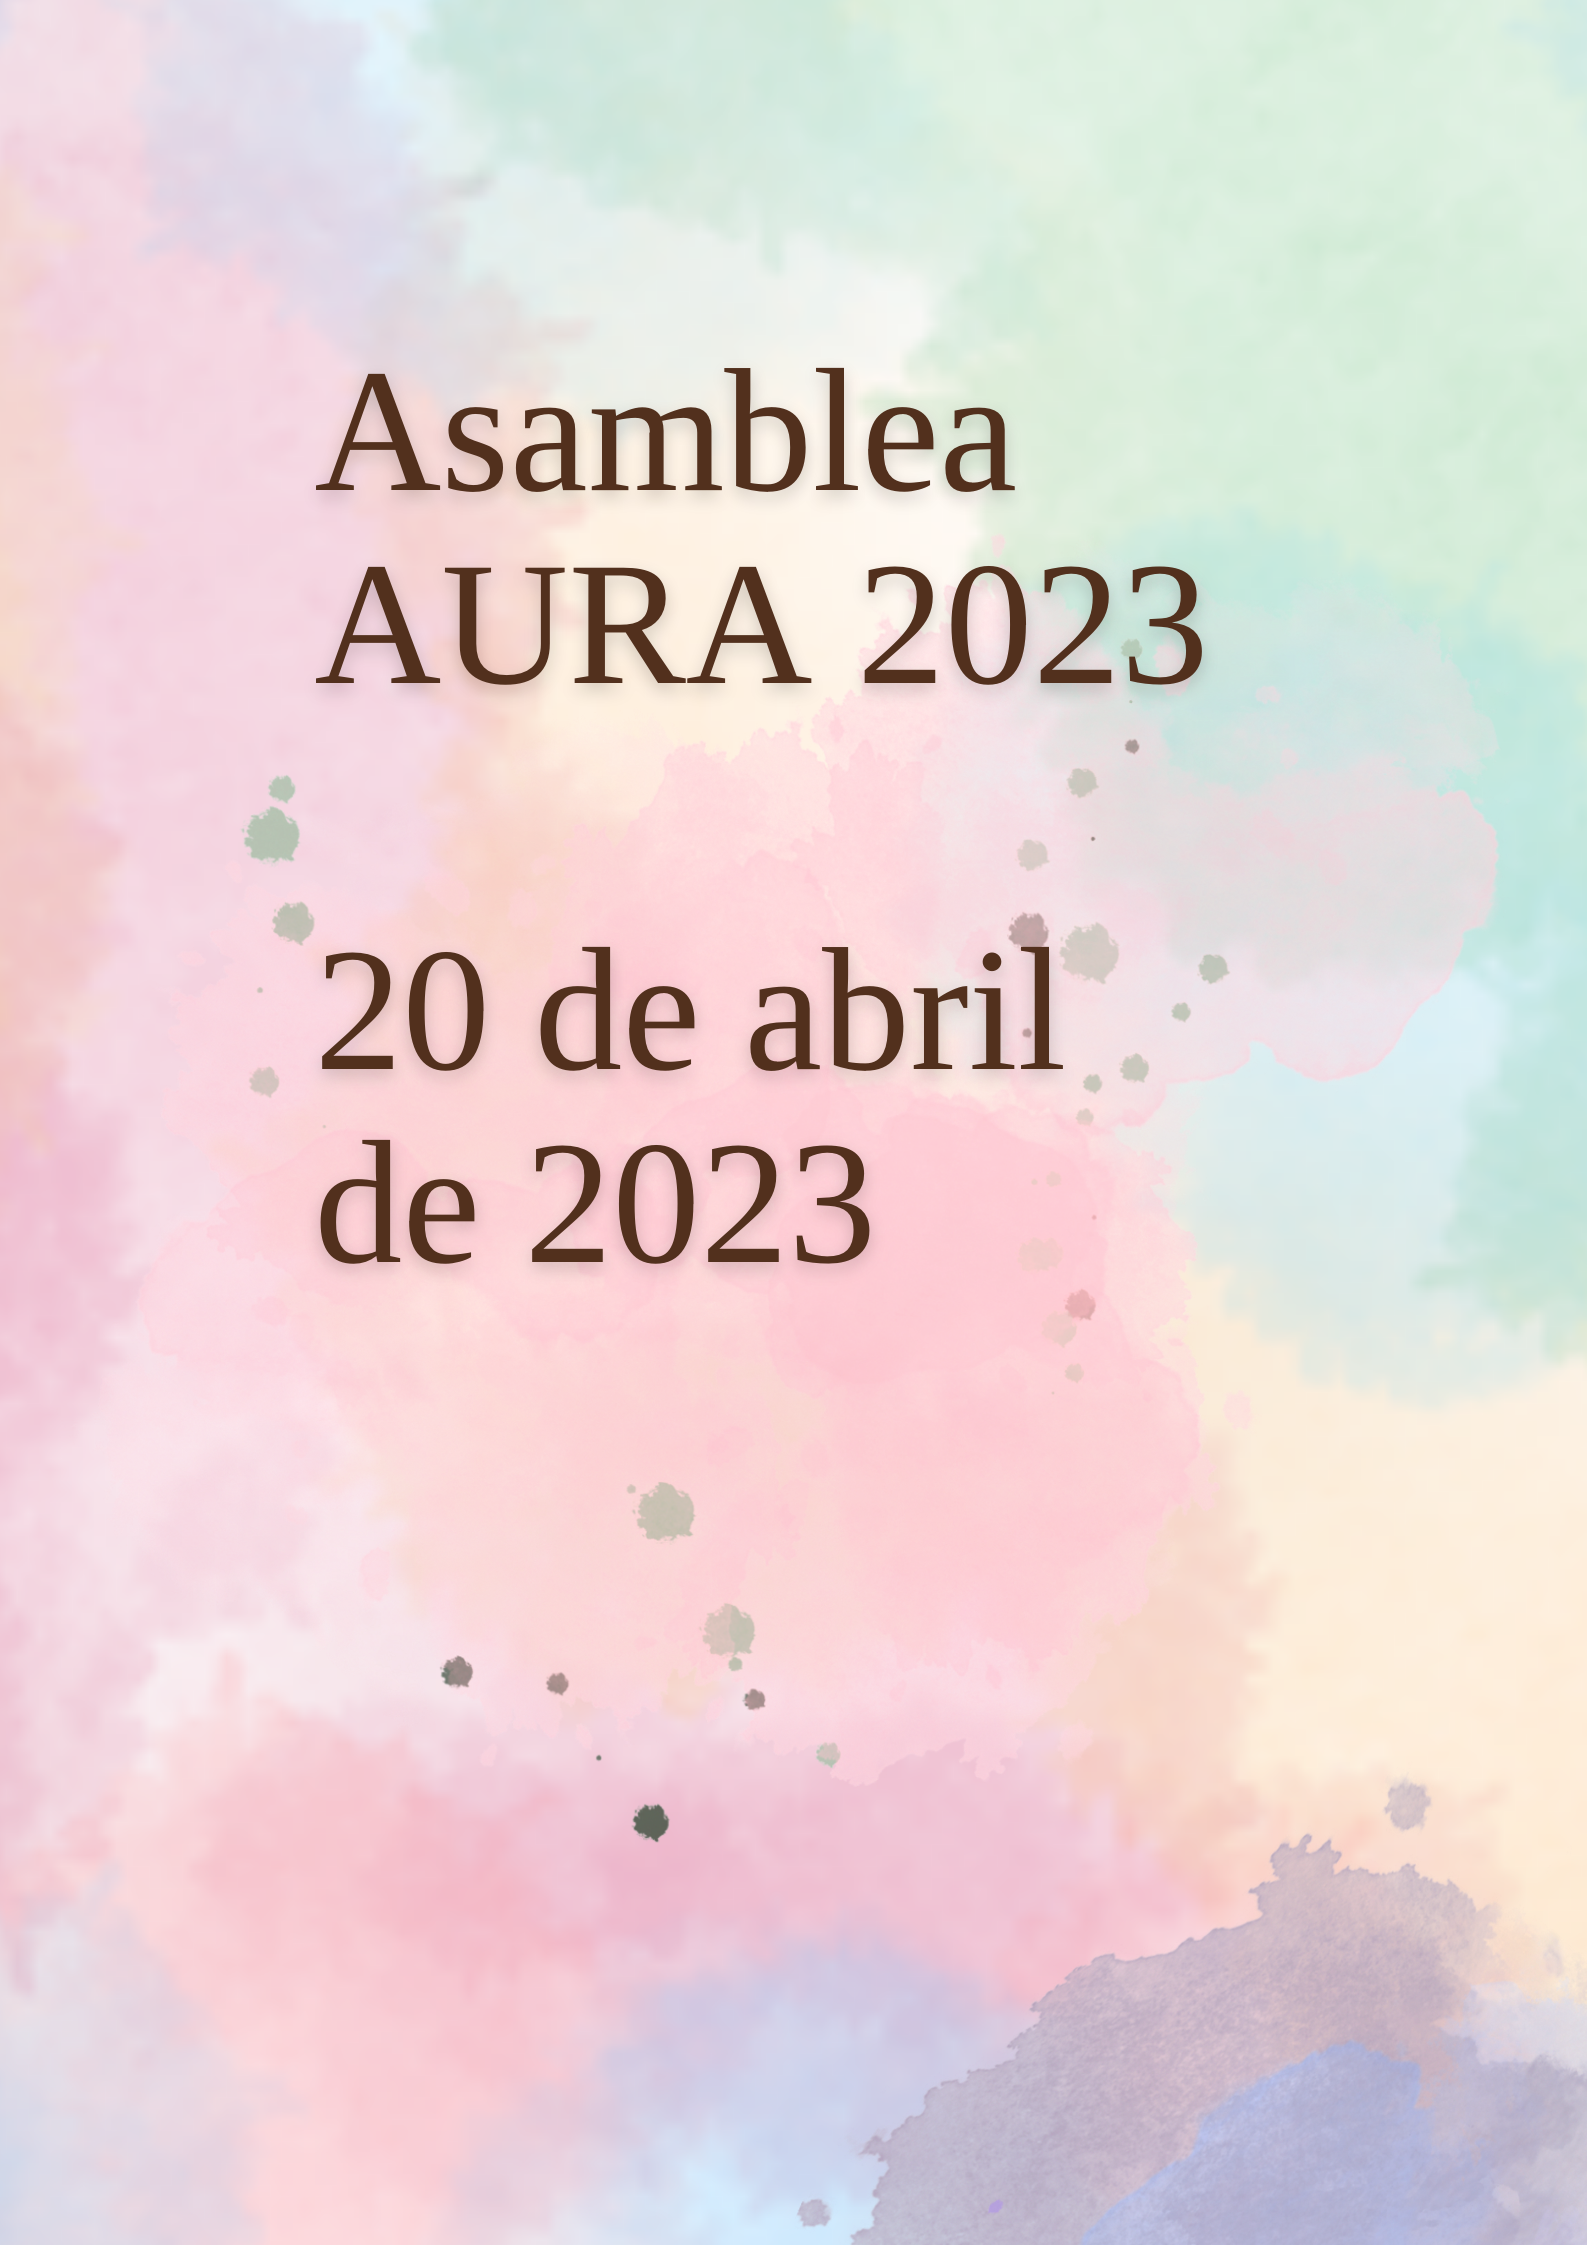 Asamblea AURA 2023